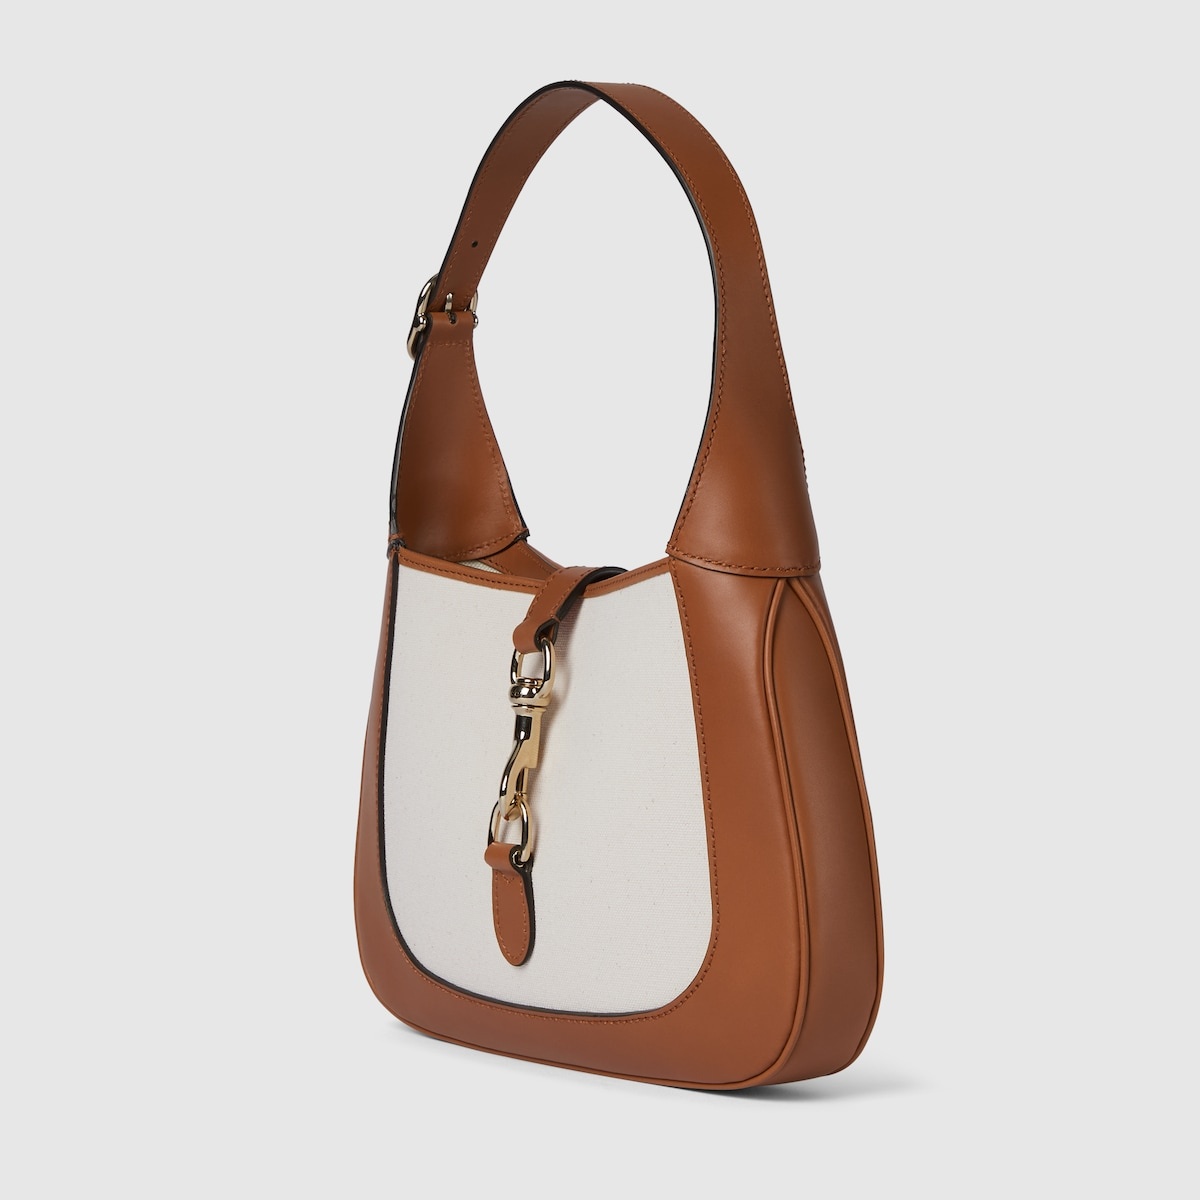 Gucci Jackie small shoulder bag - 2